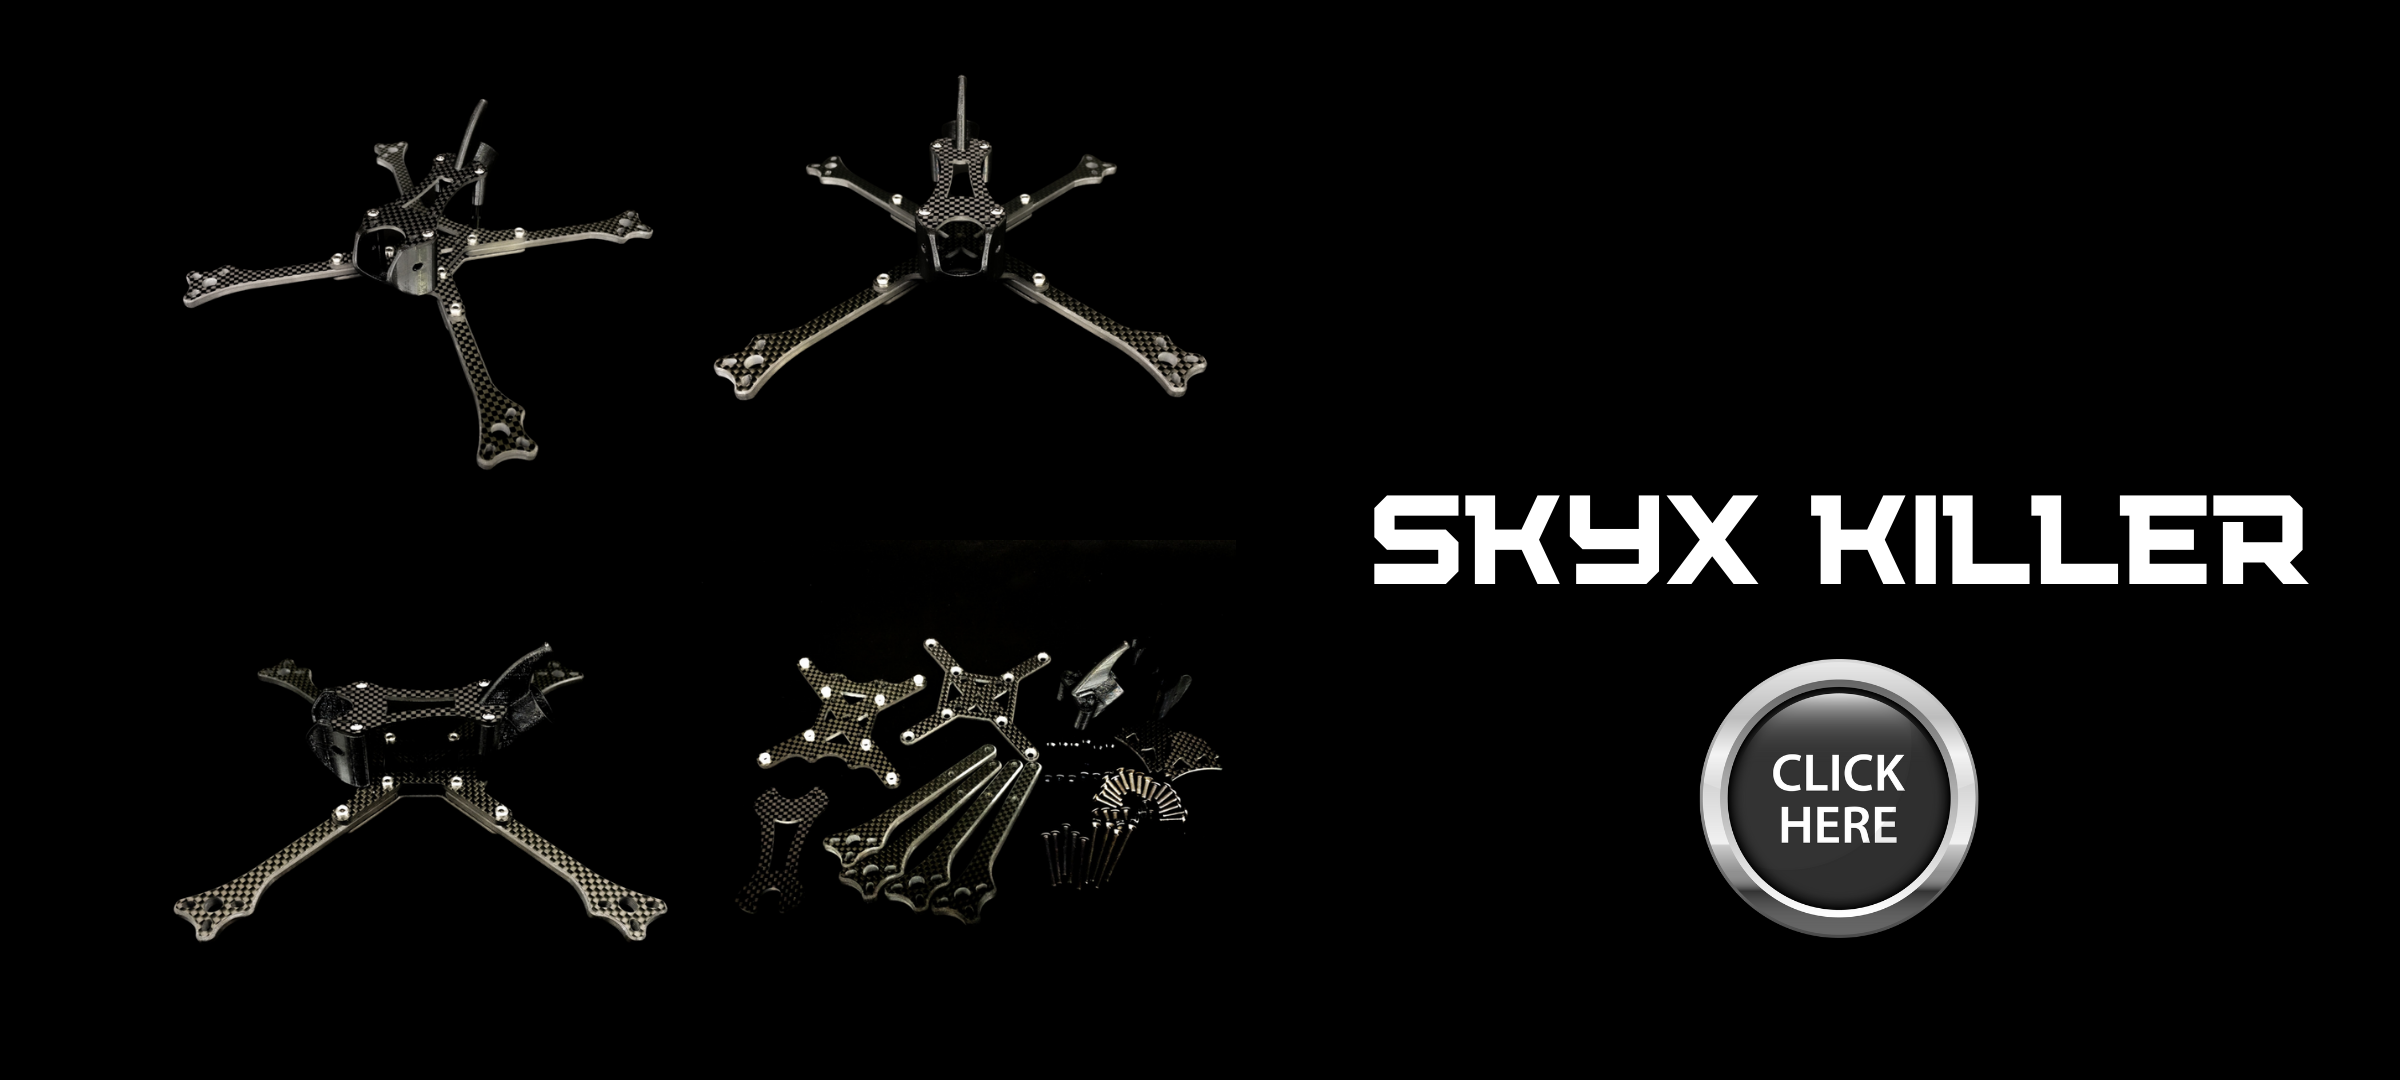 SkyX KILLERフレーム